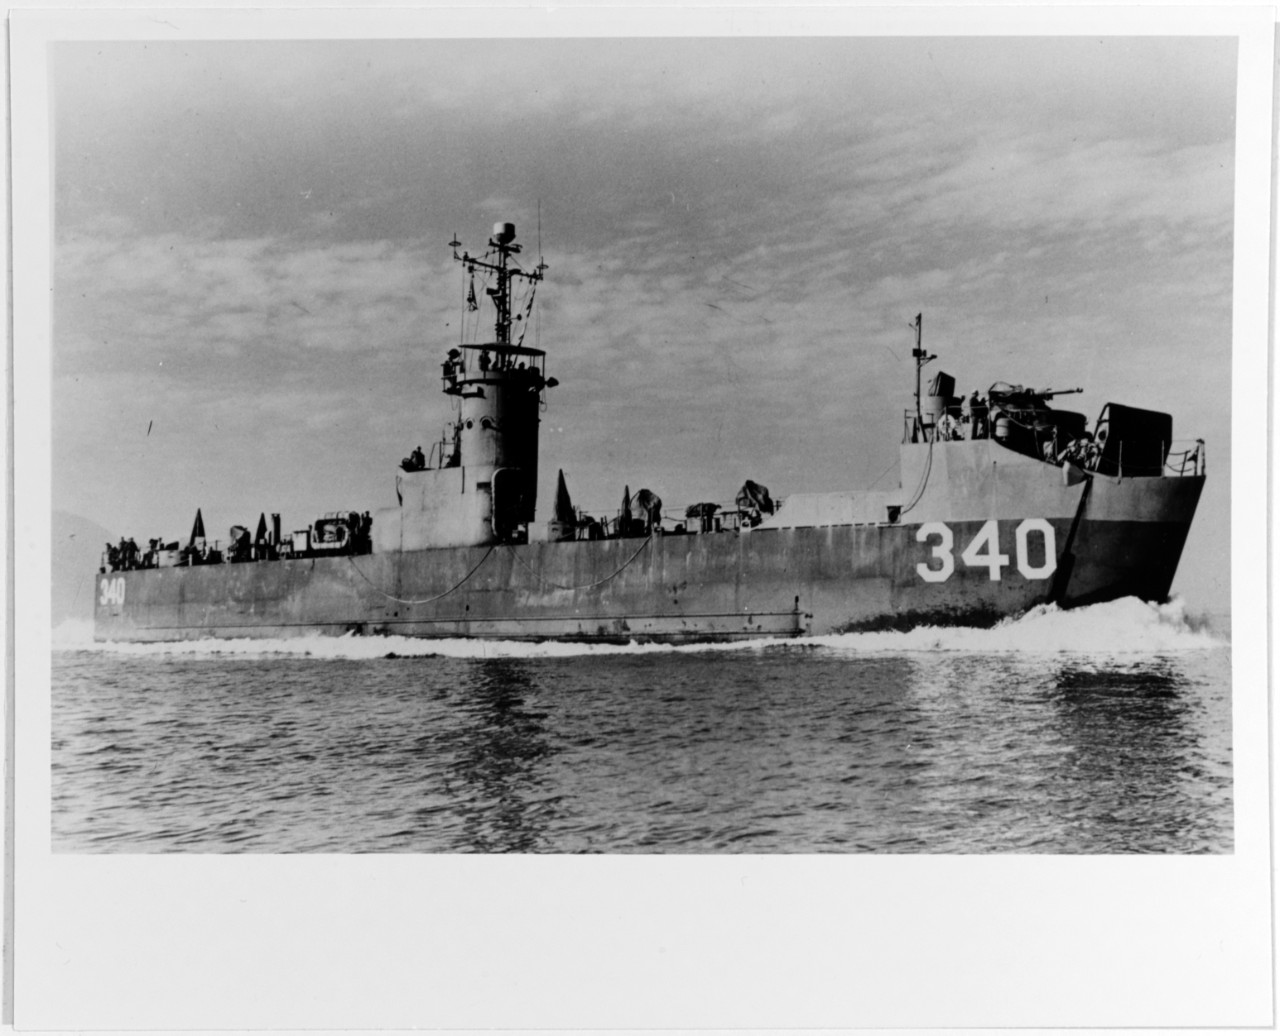 USS LSM-340